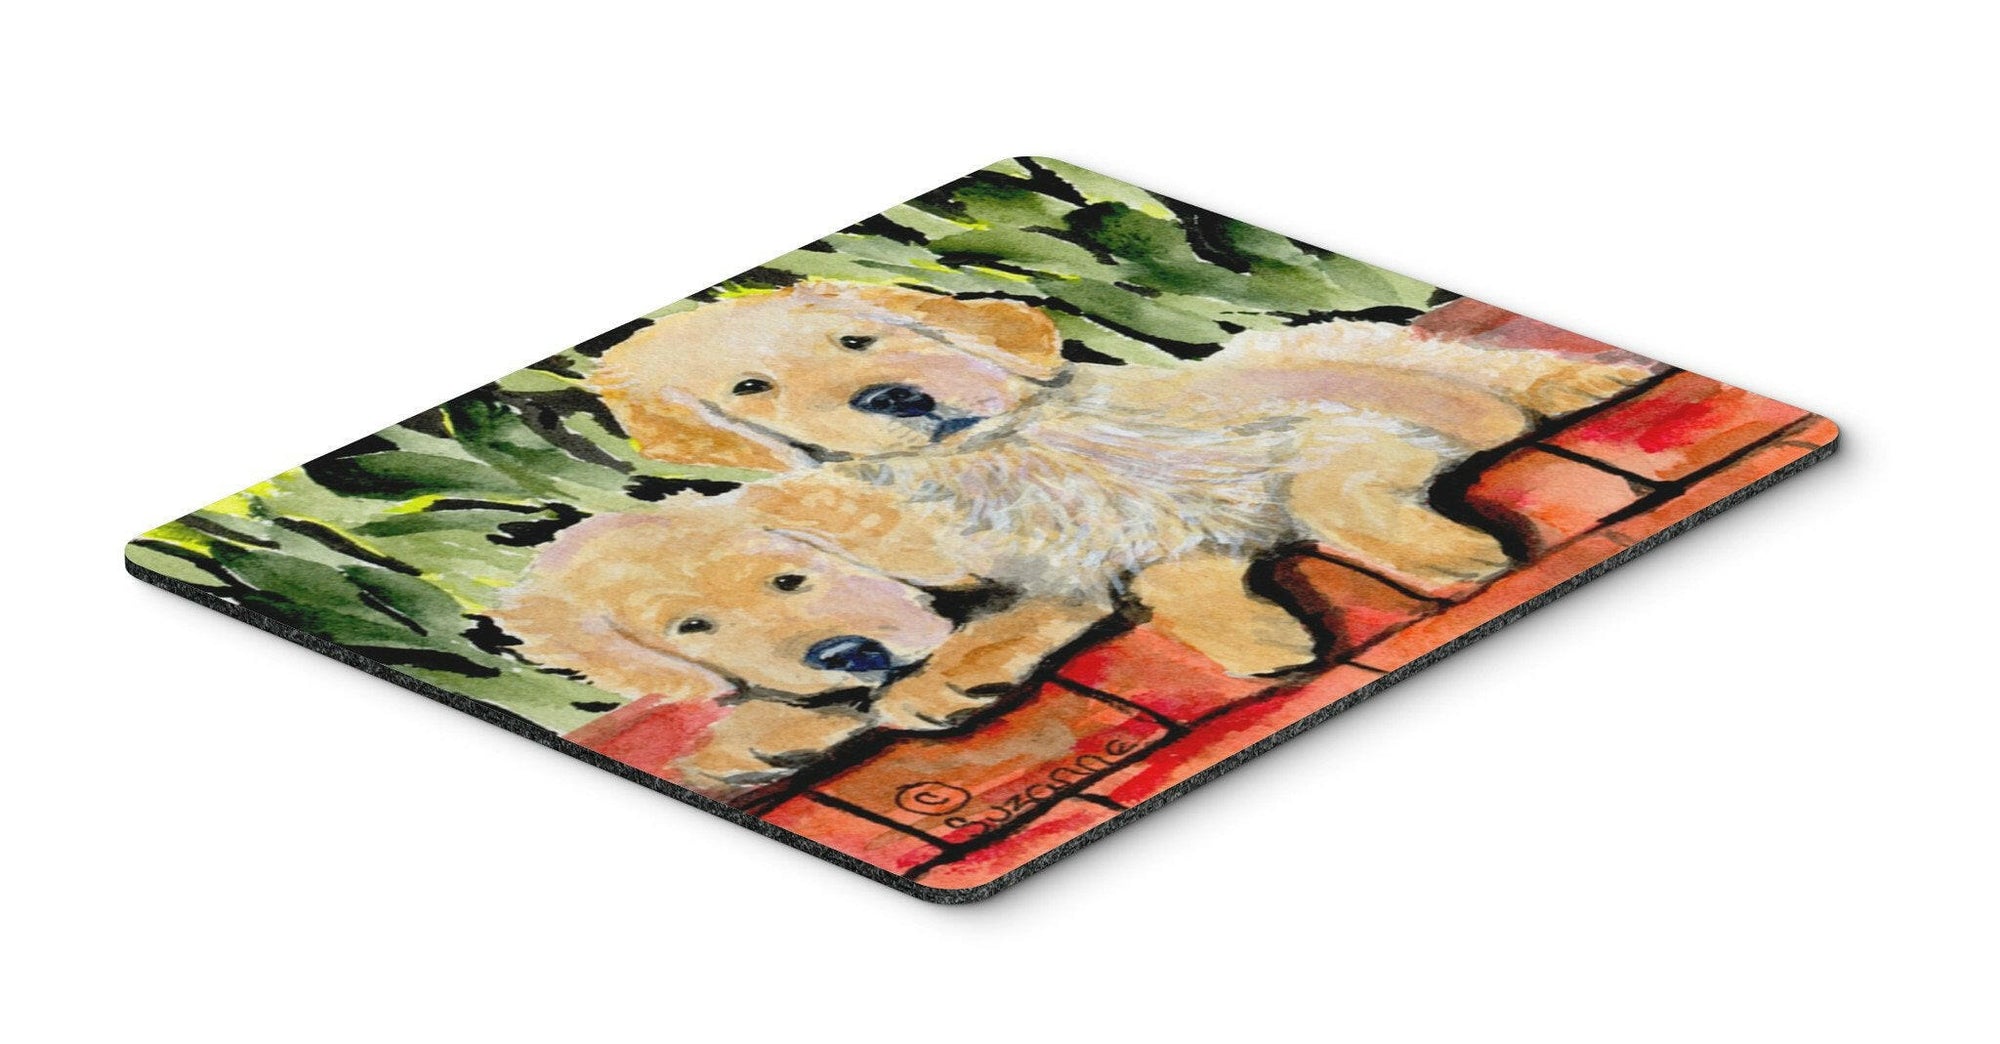 Golden Retriever Mouse pad, hot pad, or trivet by Caroline's Treasures